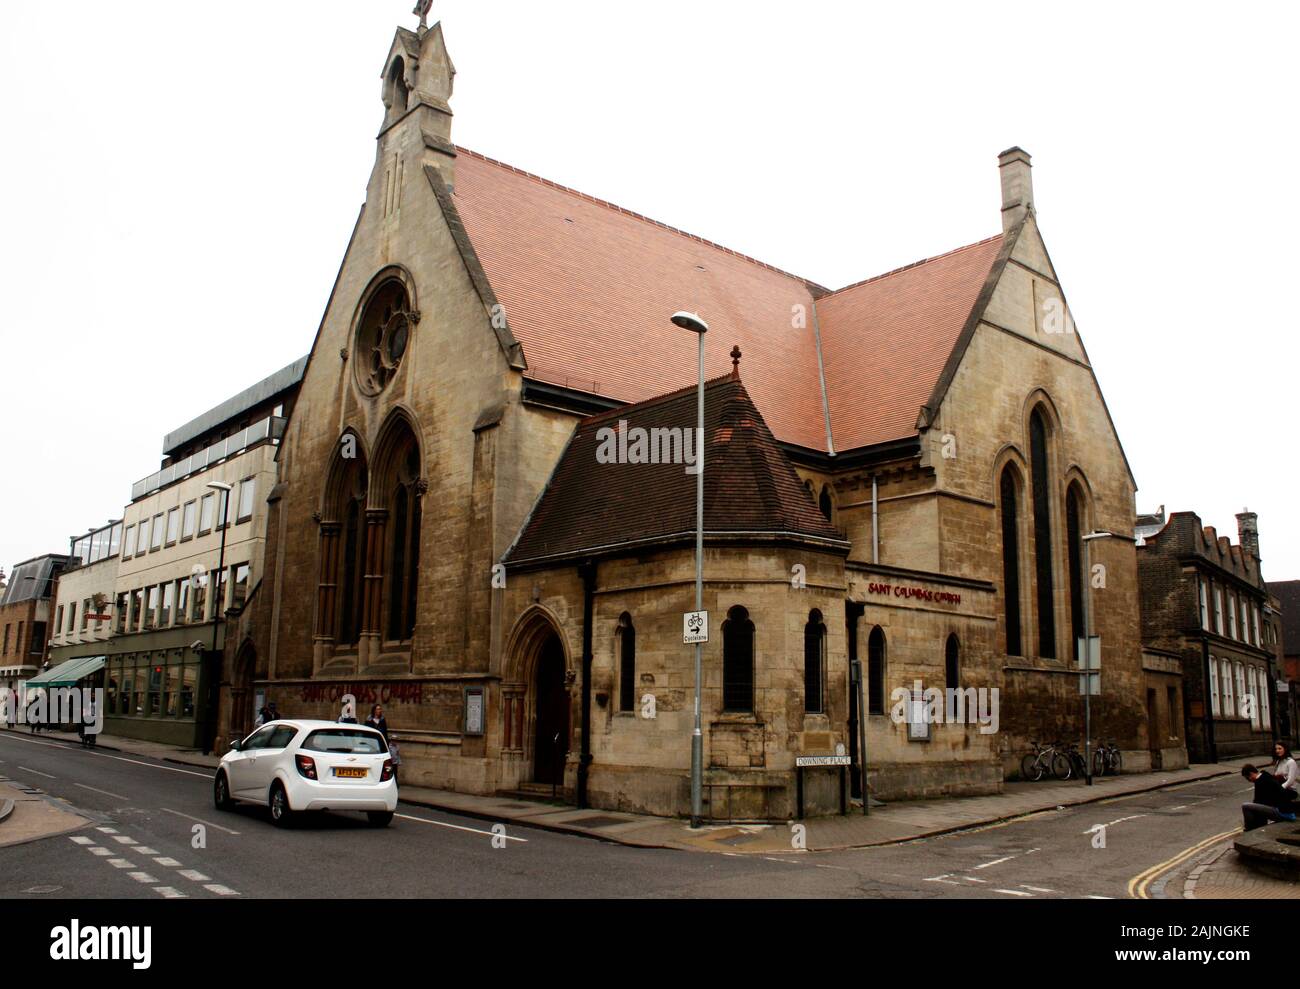 saint columba's church, Cambridge, England Stock Photo